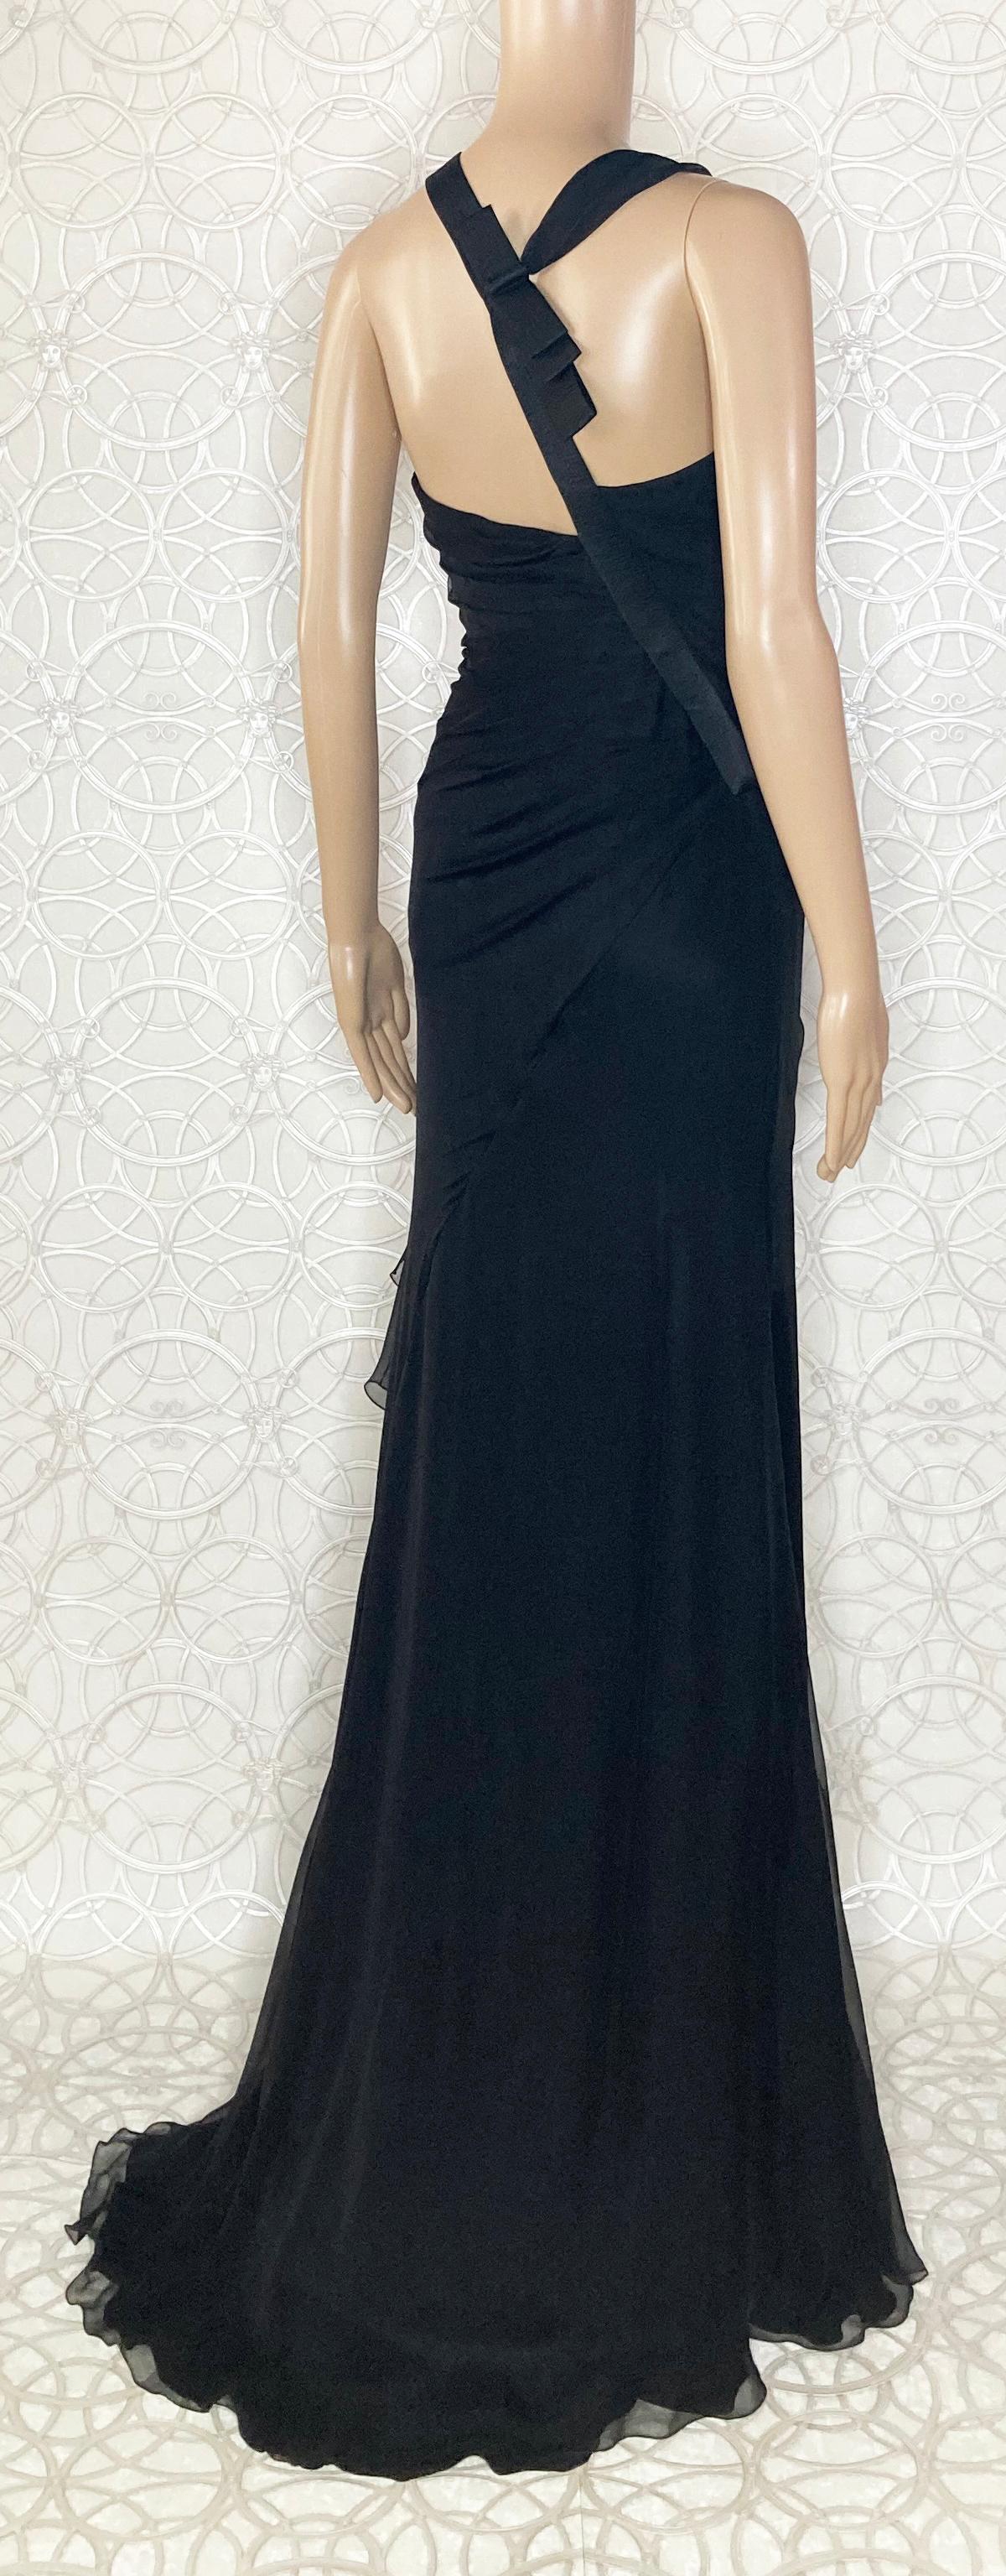 VERSACE BLACK SILK VANITAS DETAIL LONG GOWN Dress 38 -2 For Sale 9